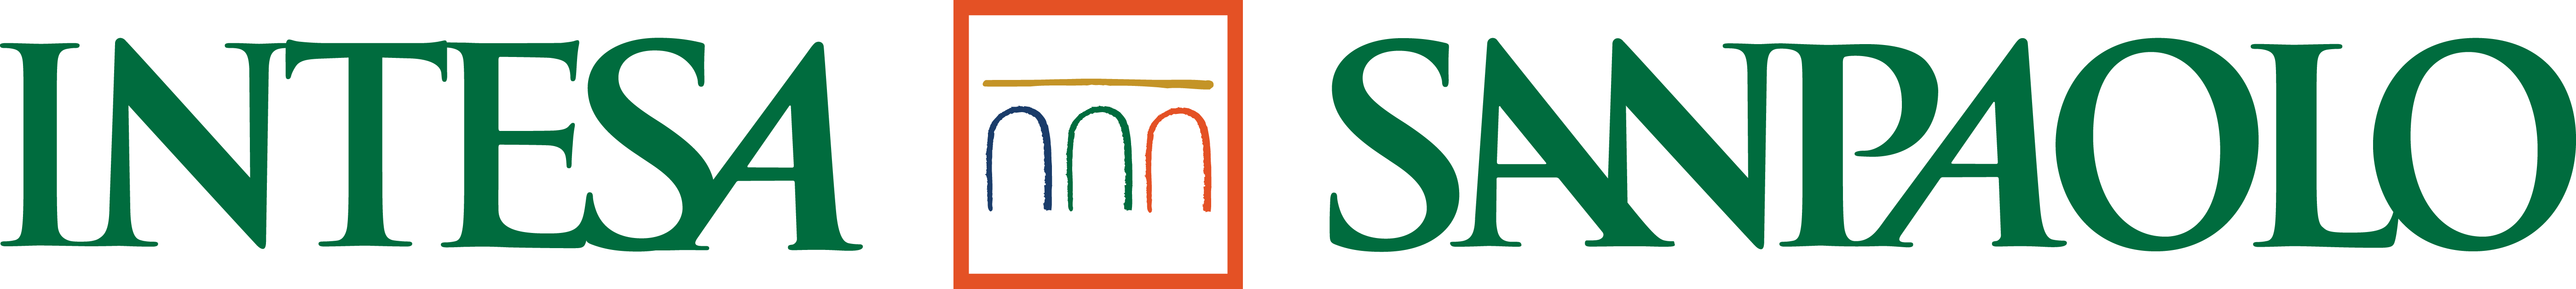 Intesa_San_Paolo_logo